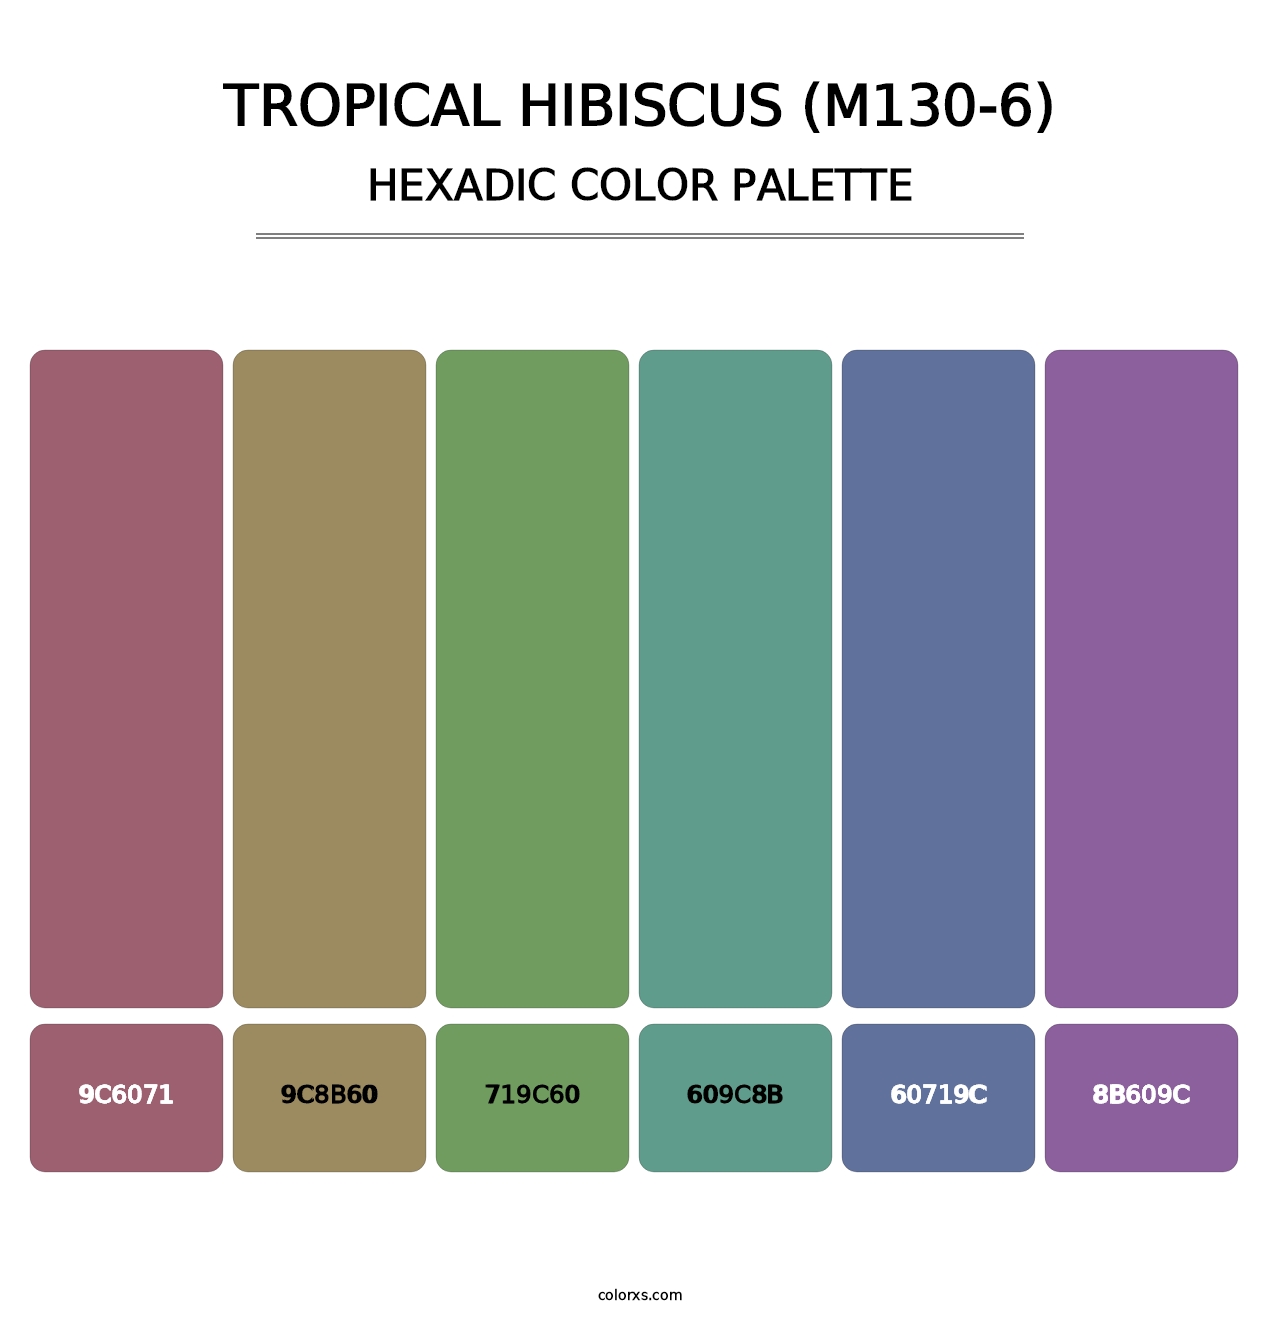 Tropical Hibiscus (M130-6) - Hexadic Color Palette